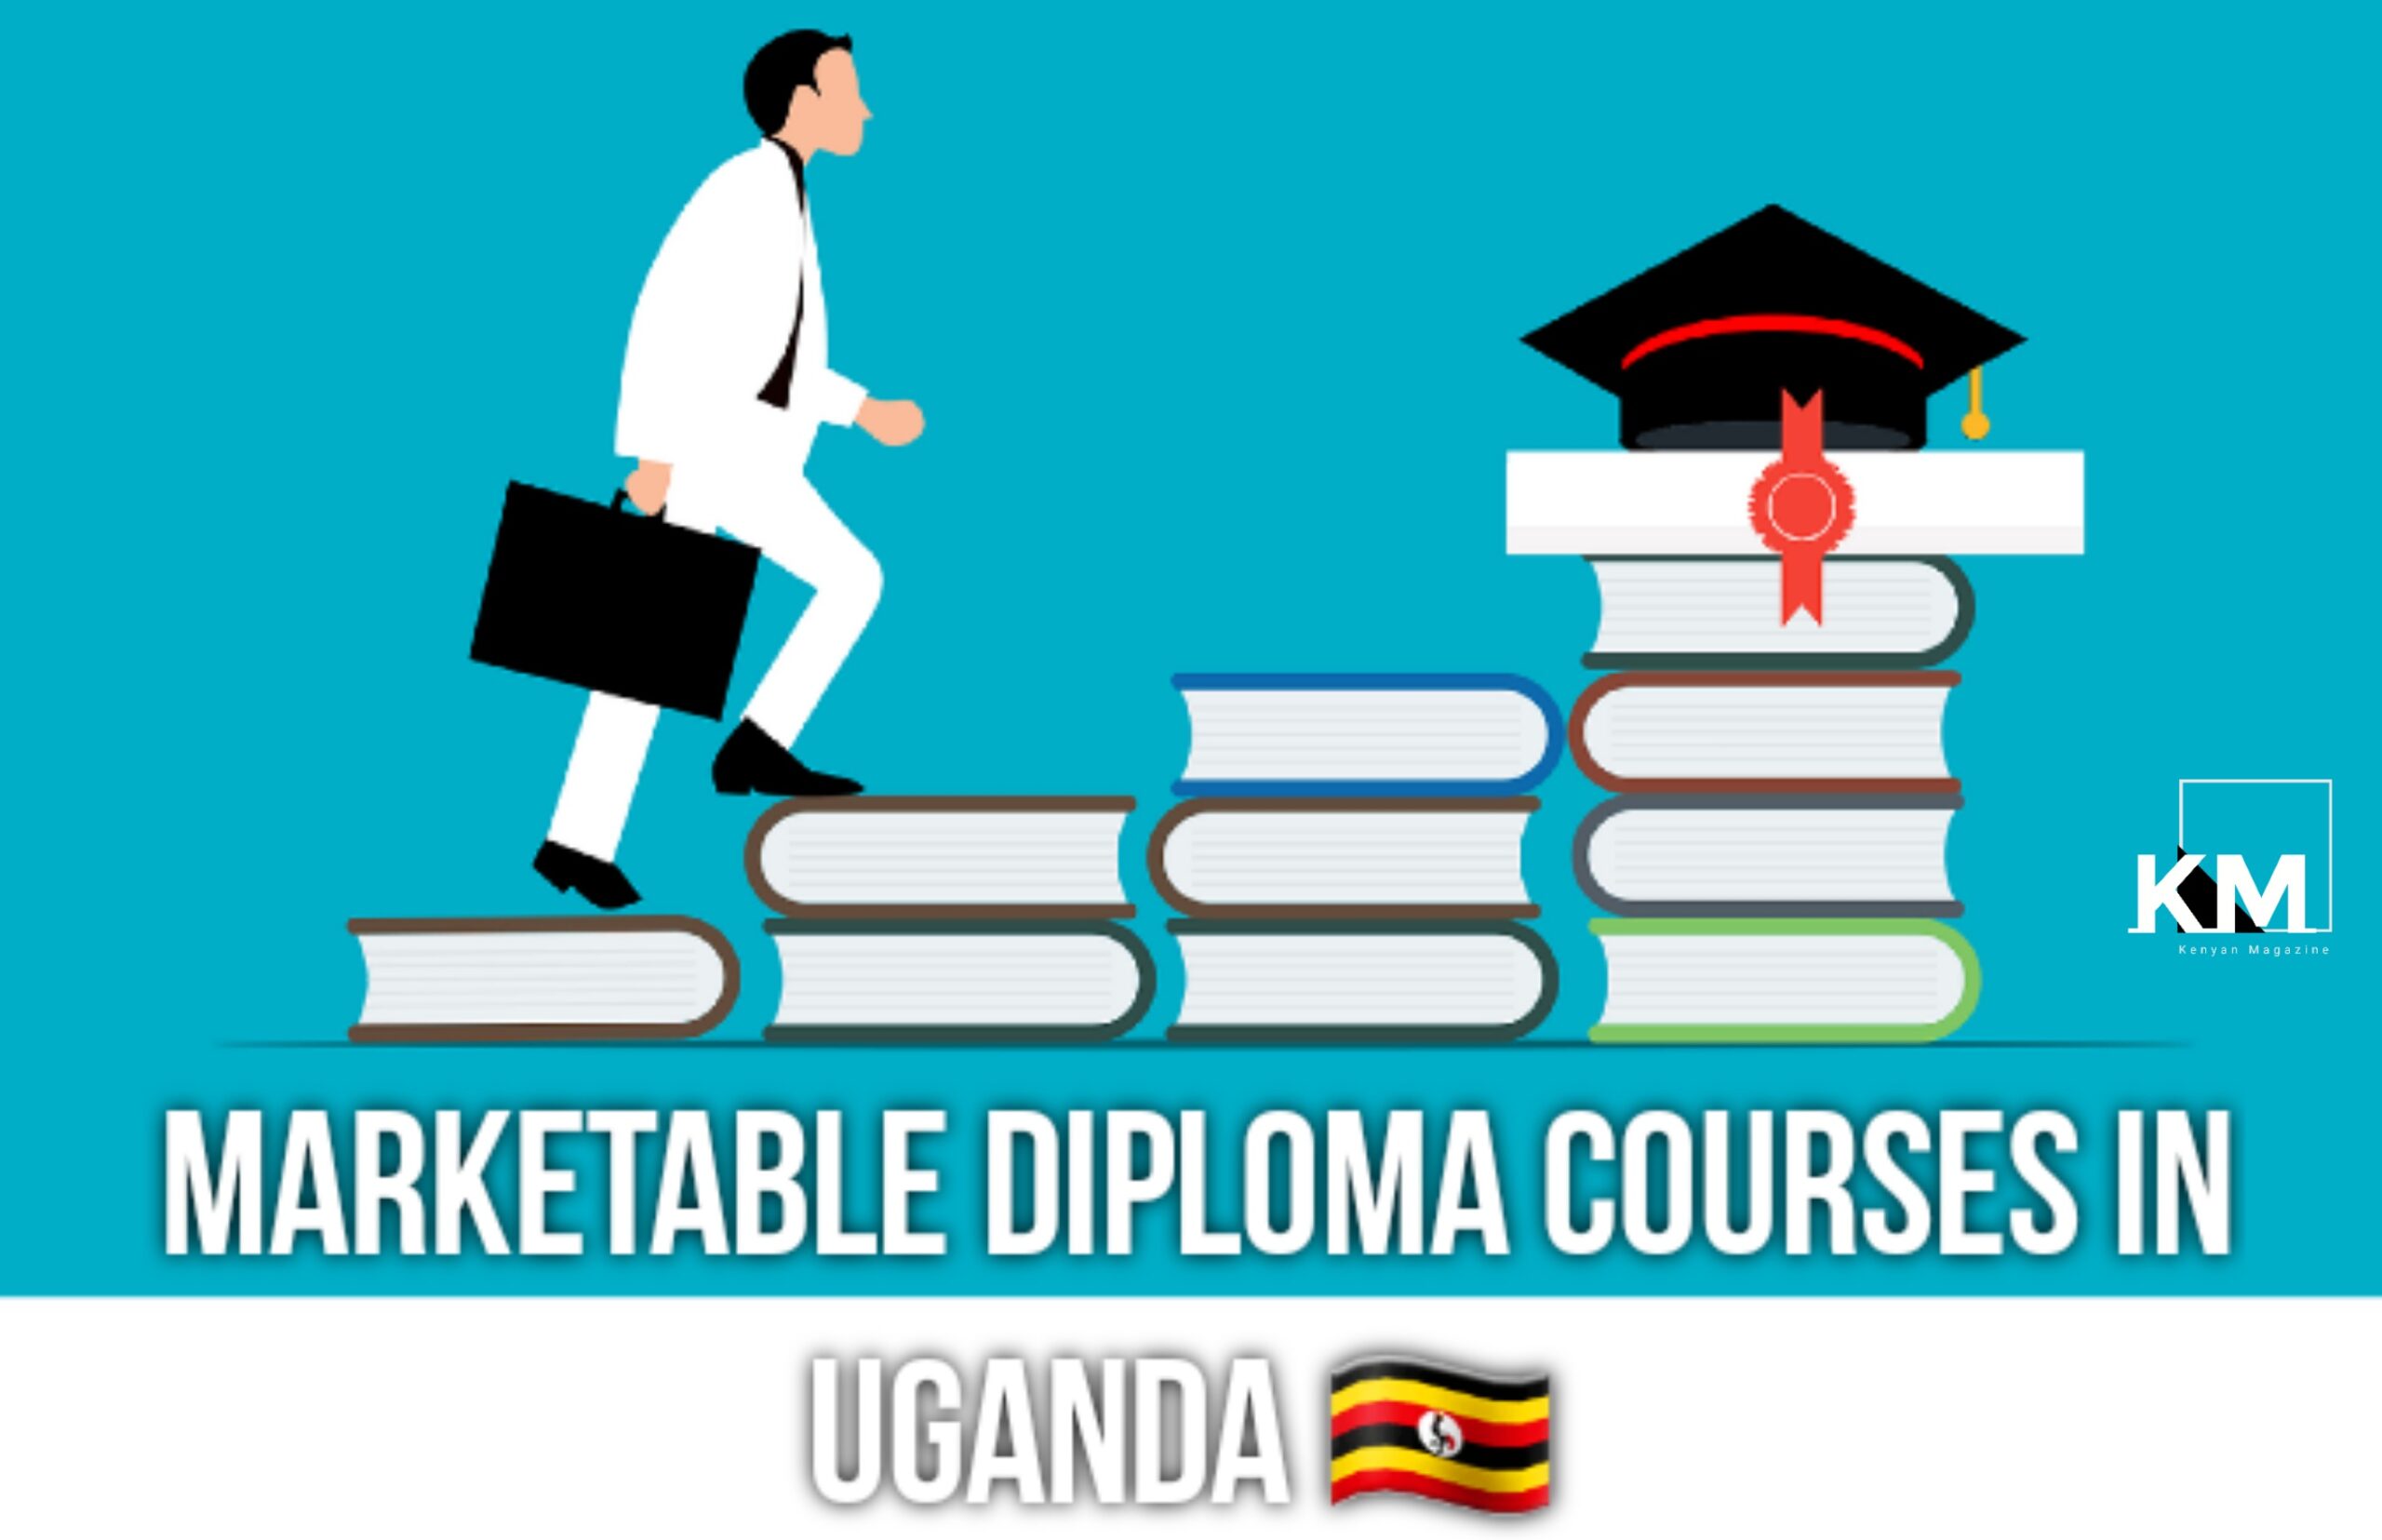 Marketable Diploma courses in Uganda